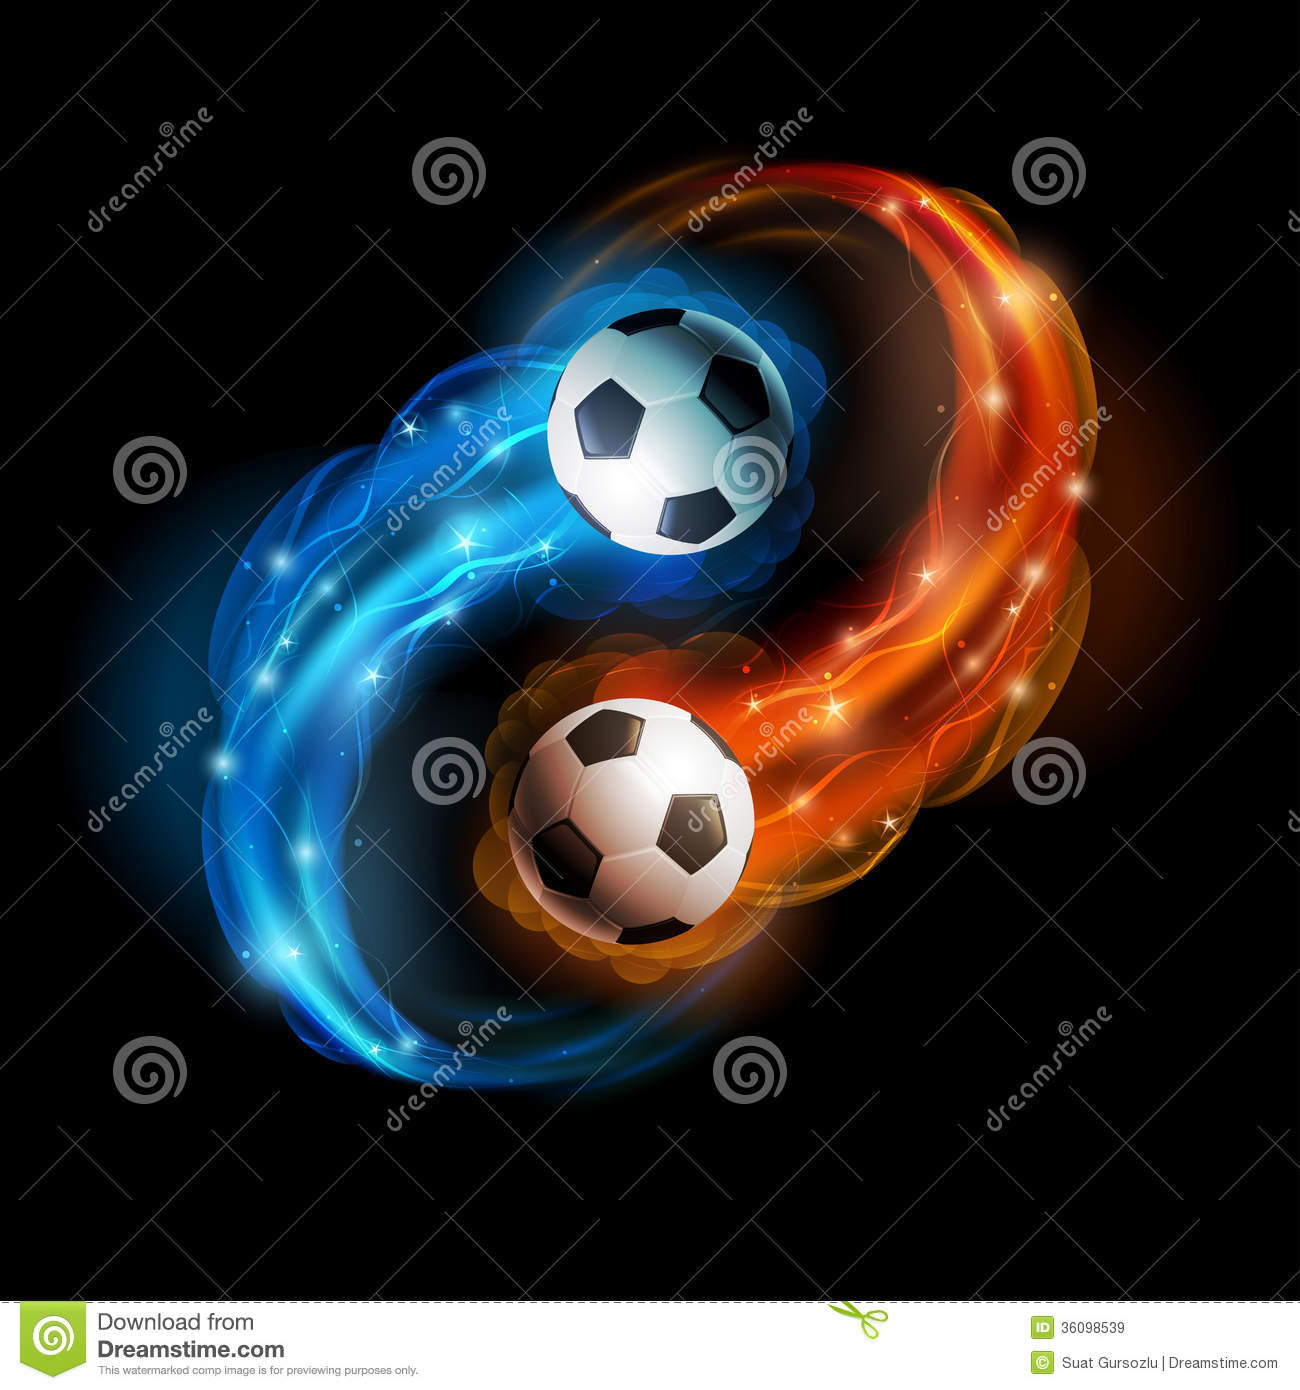 Cool Soccer Ball Backgrounds Soccer ball royalty stock 1300x1390